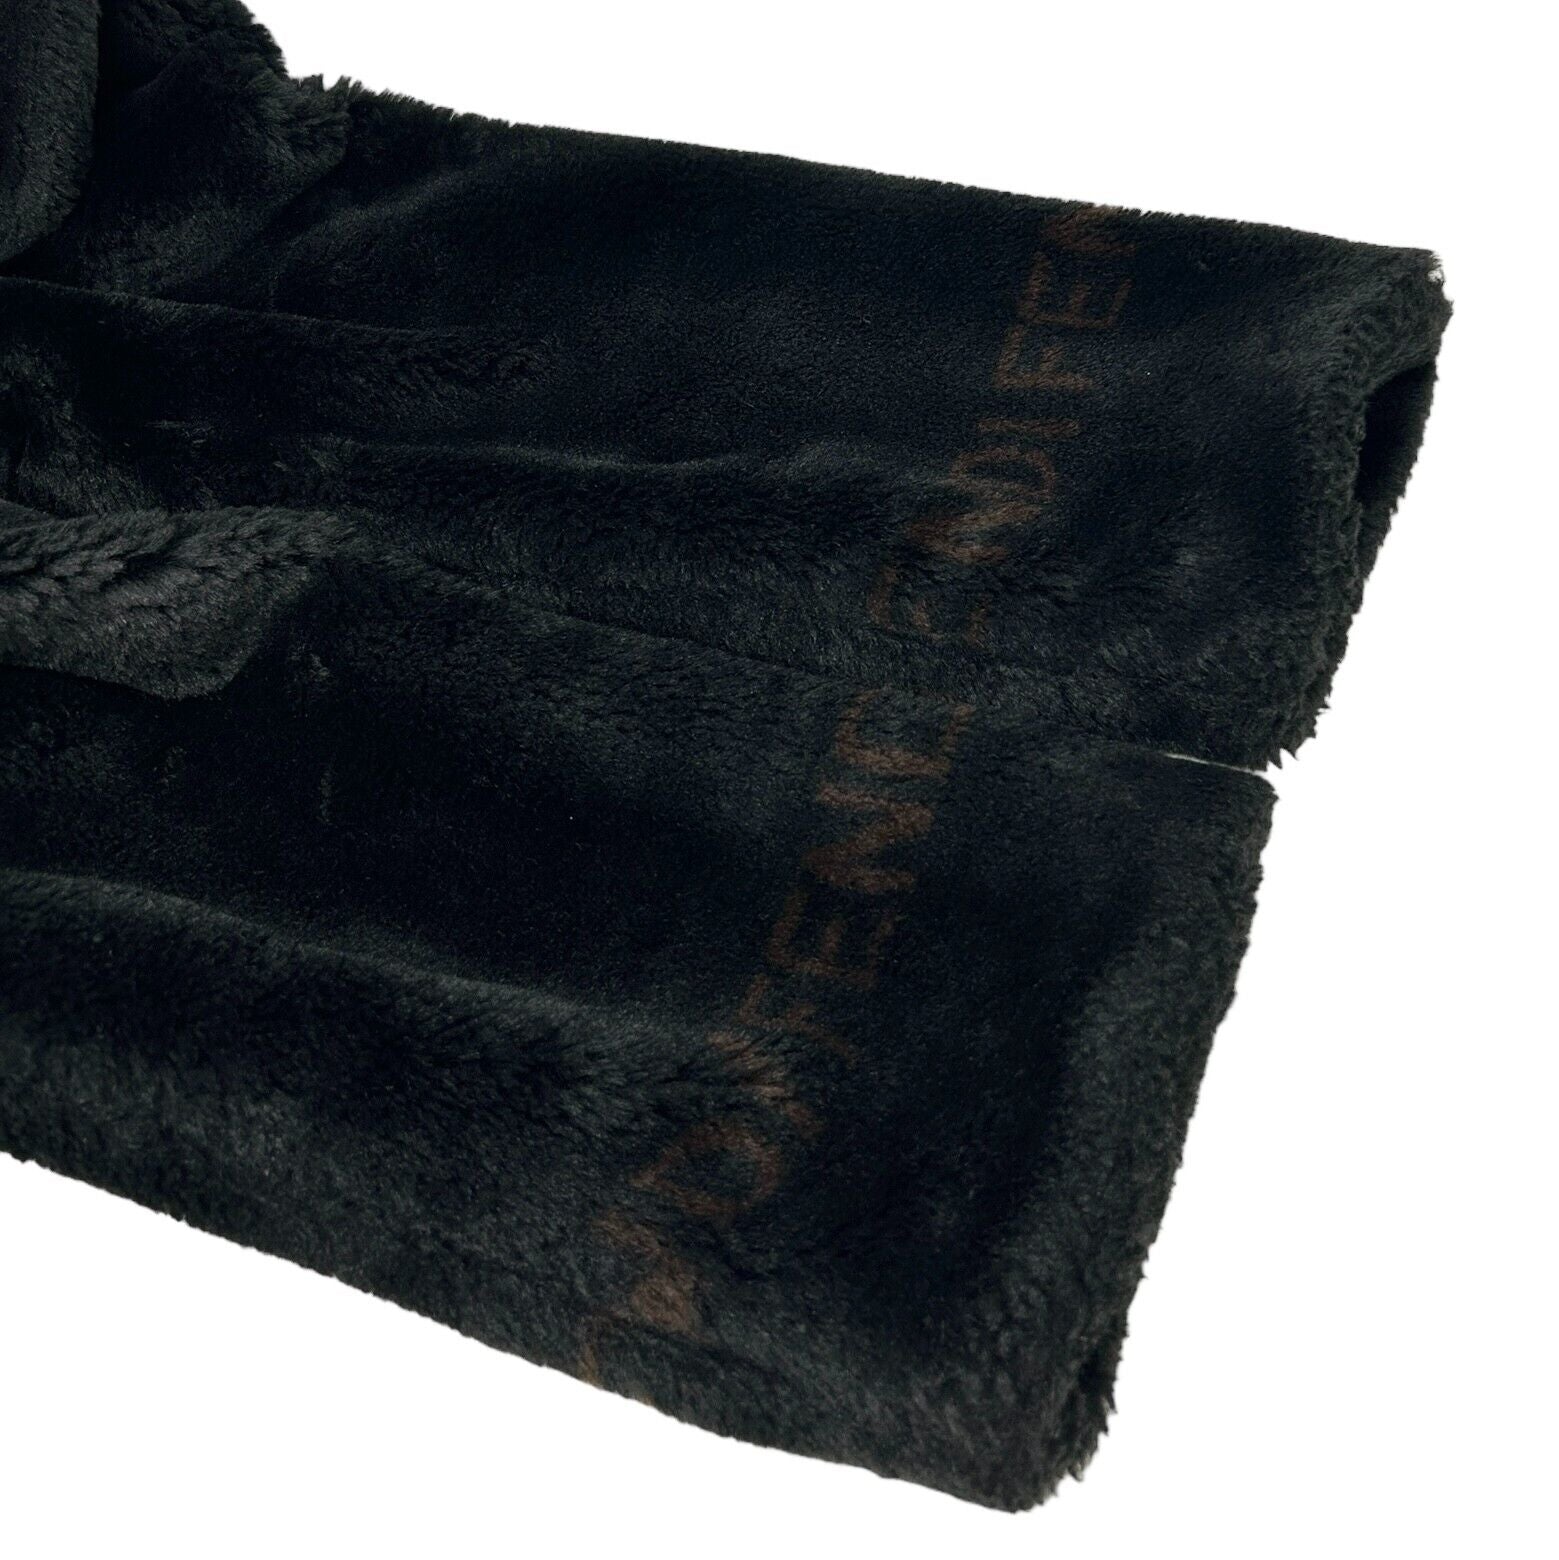 FENDI Vintage Logo Faux Fur Coat #42 Black Modacrylic Jacket Button RankAB